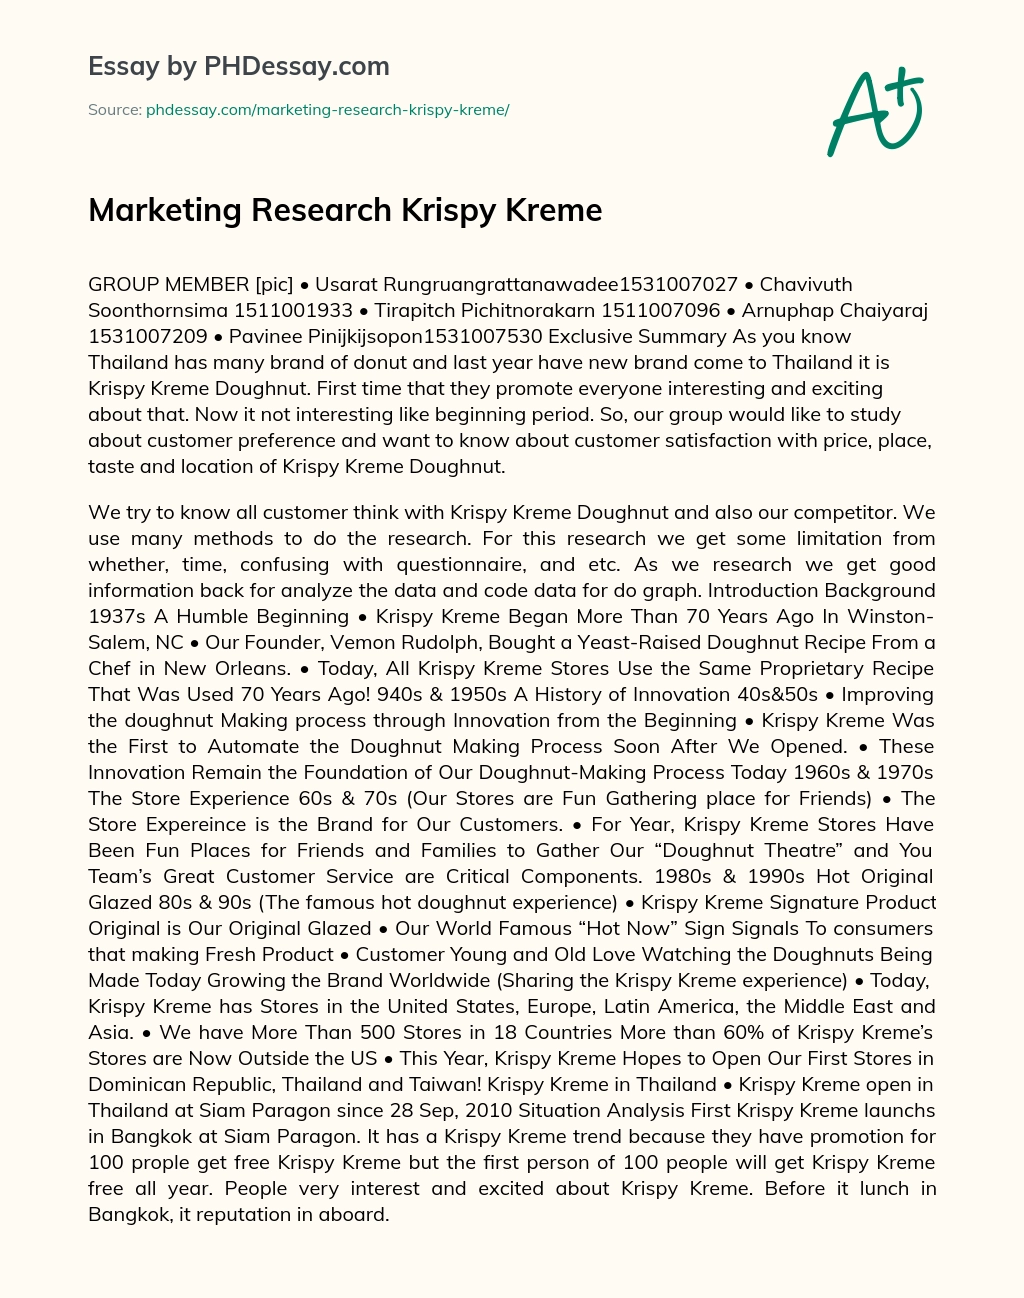 Marketing Research Krispy Kreme essay